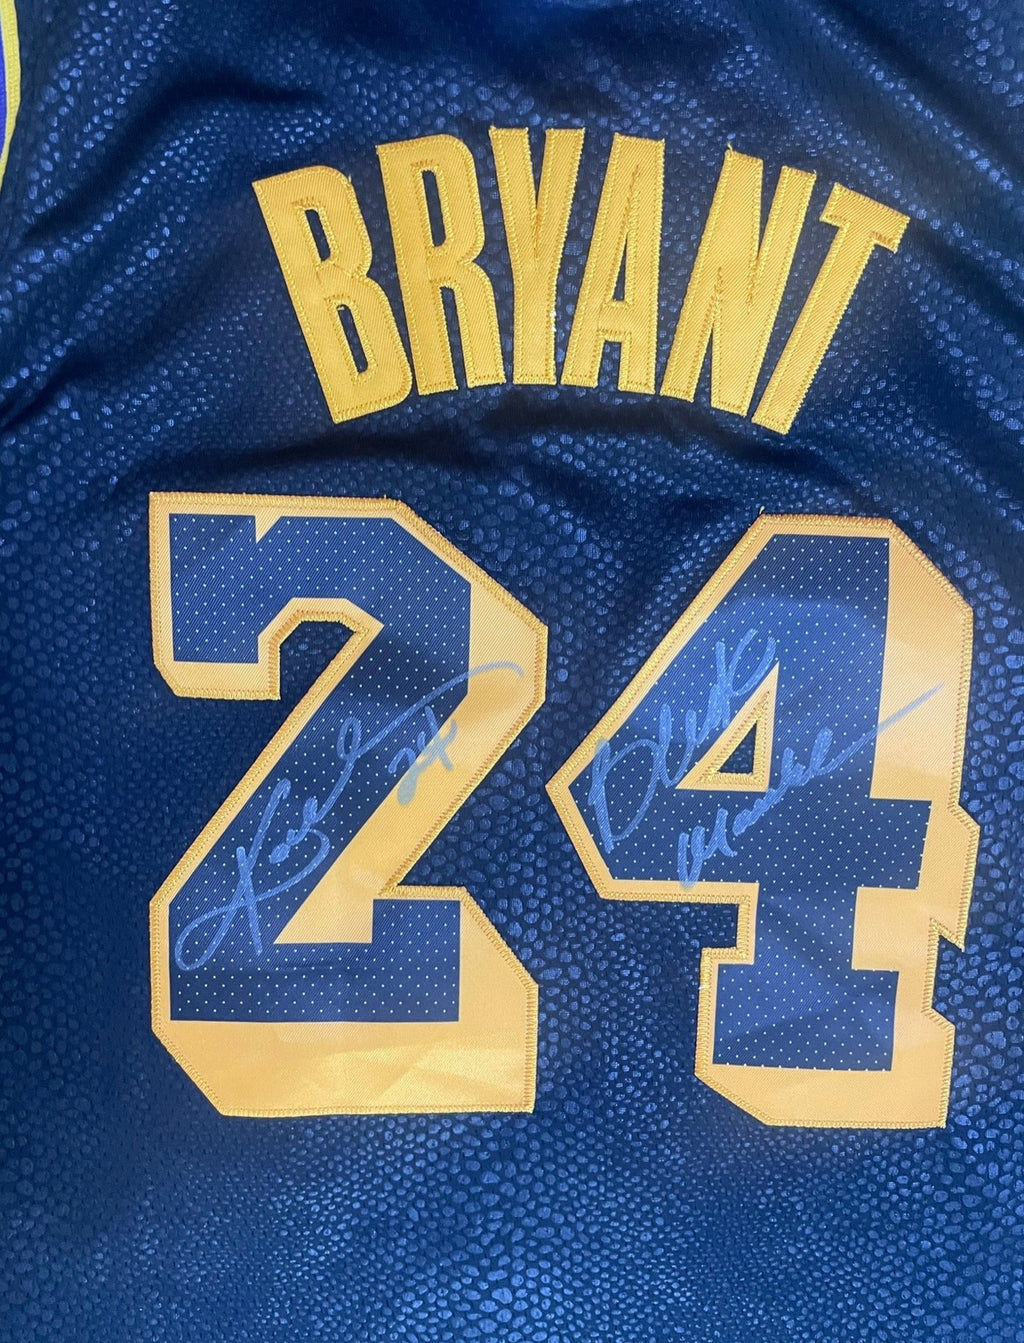 Bryant Throwback 24# Mamba Basketball Jersey Los Angeles Stitched Kobe